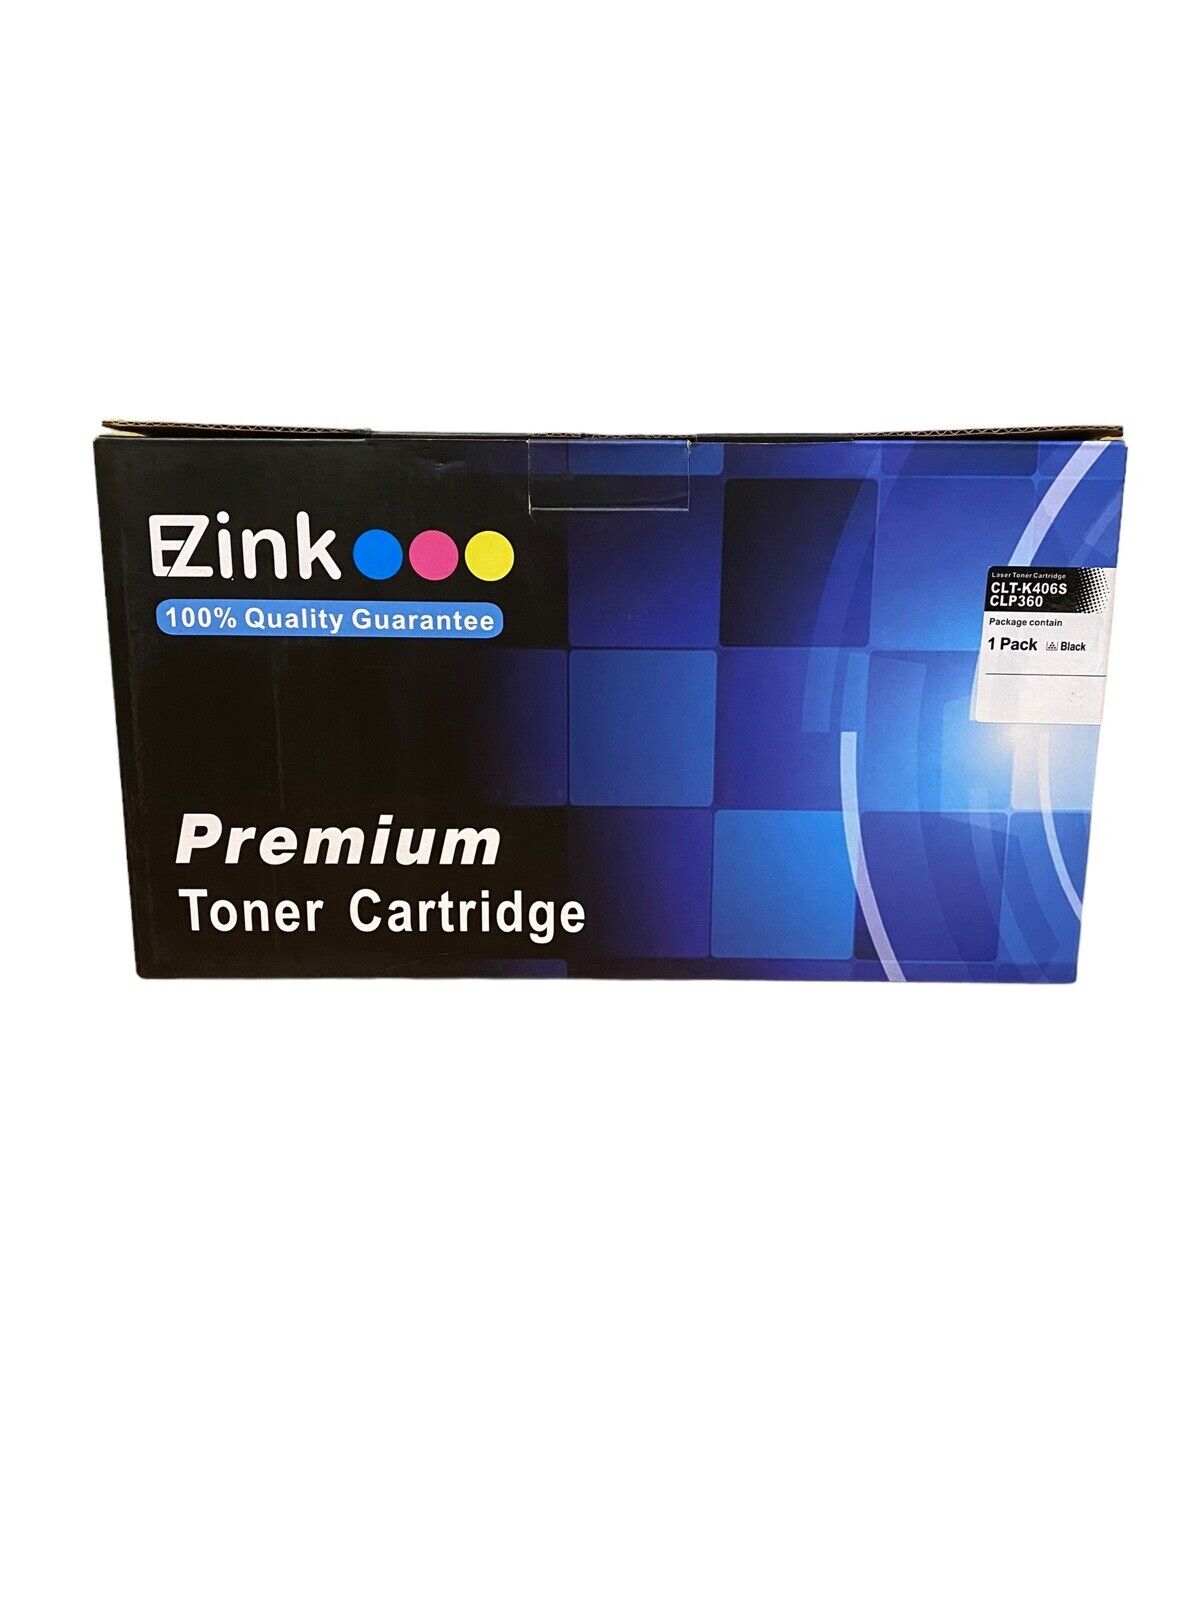 EZINK Premium Toner Cartridge Expired High-Quality Printing Supplies Black Ink 2